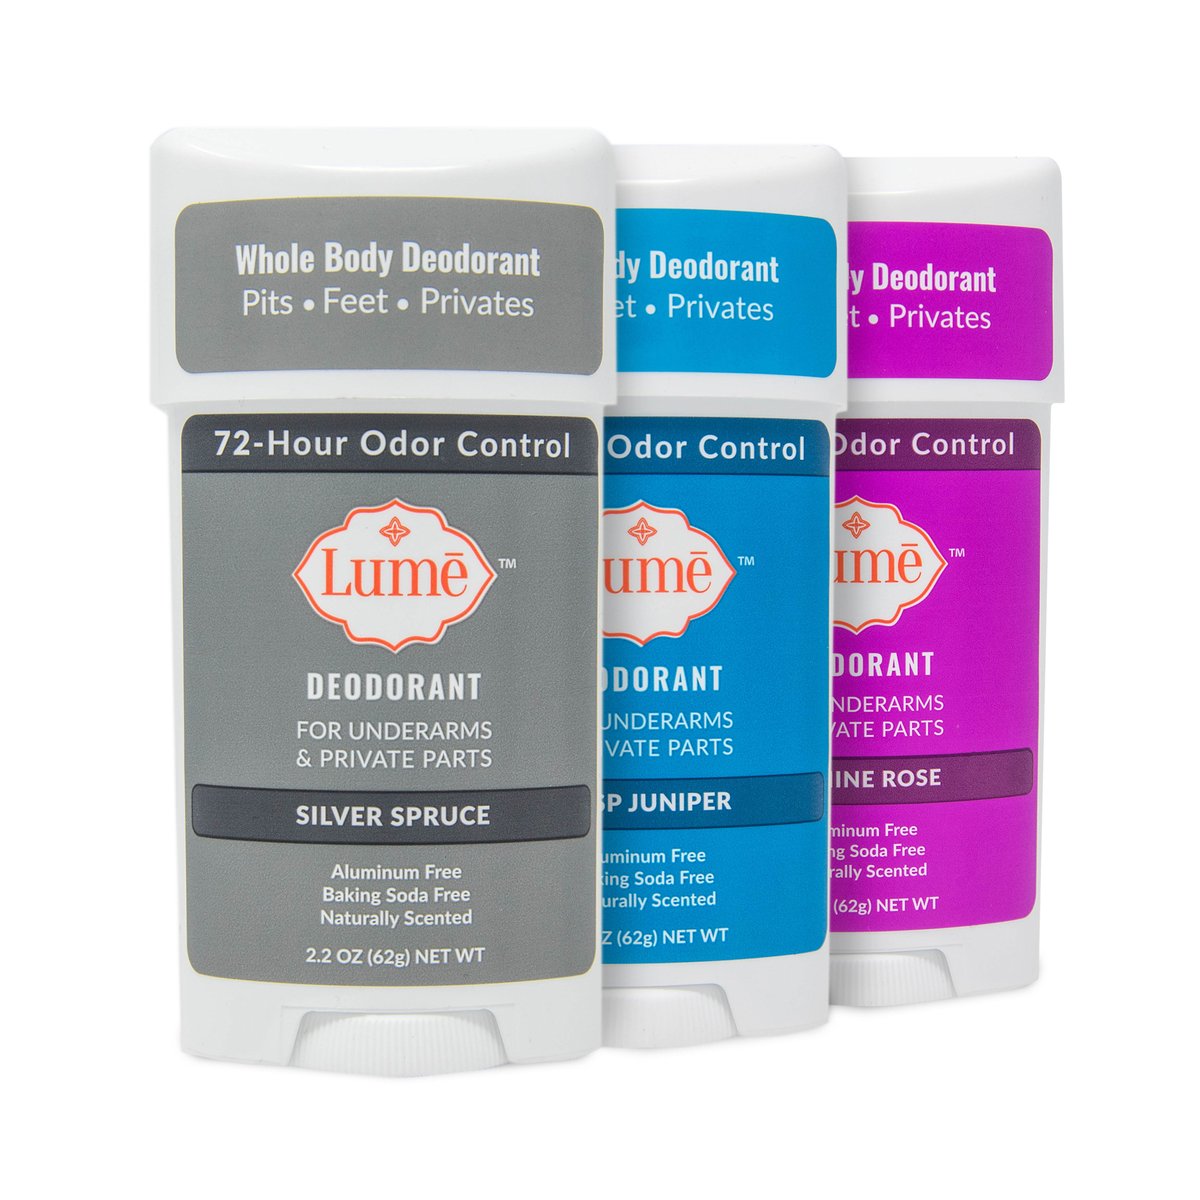 Deodorant Stick & Tube Set by Lume'